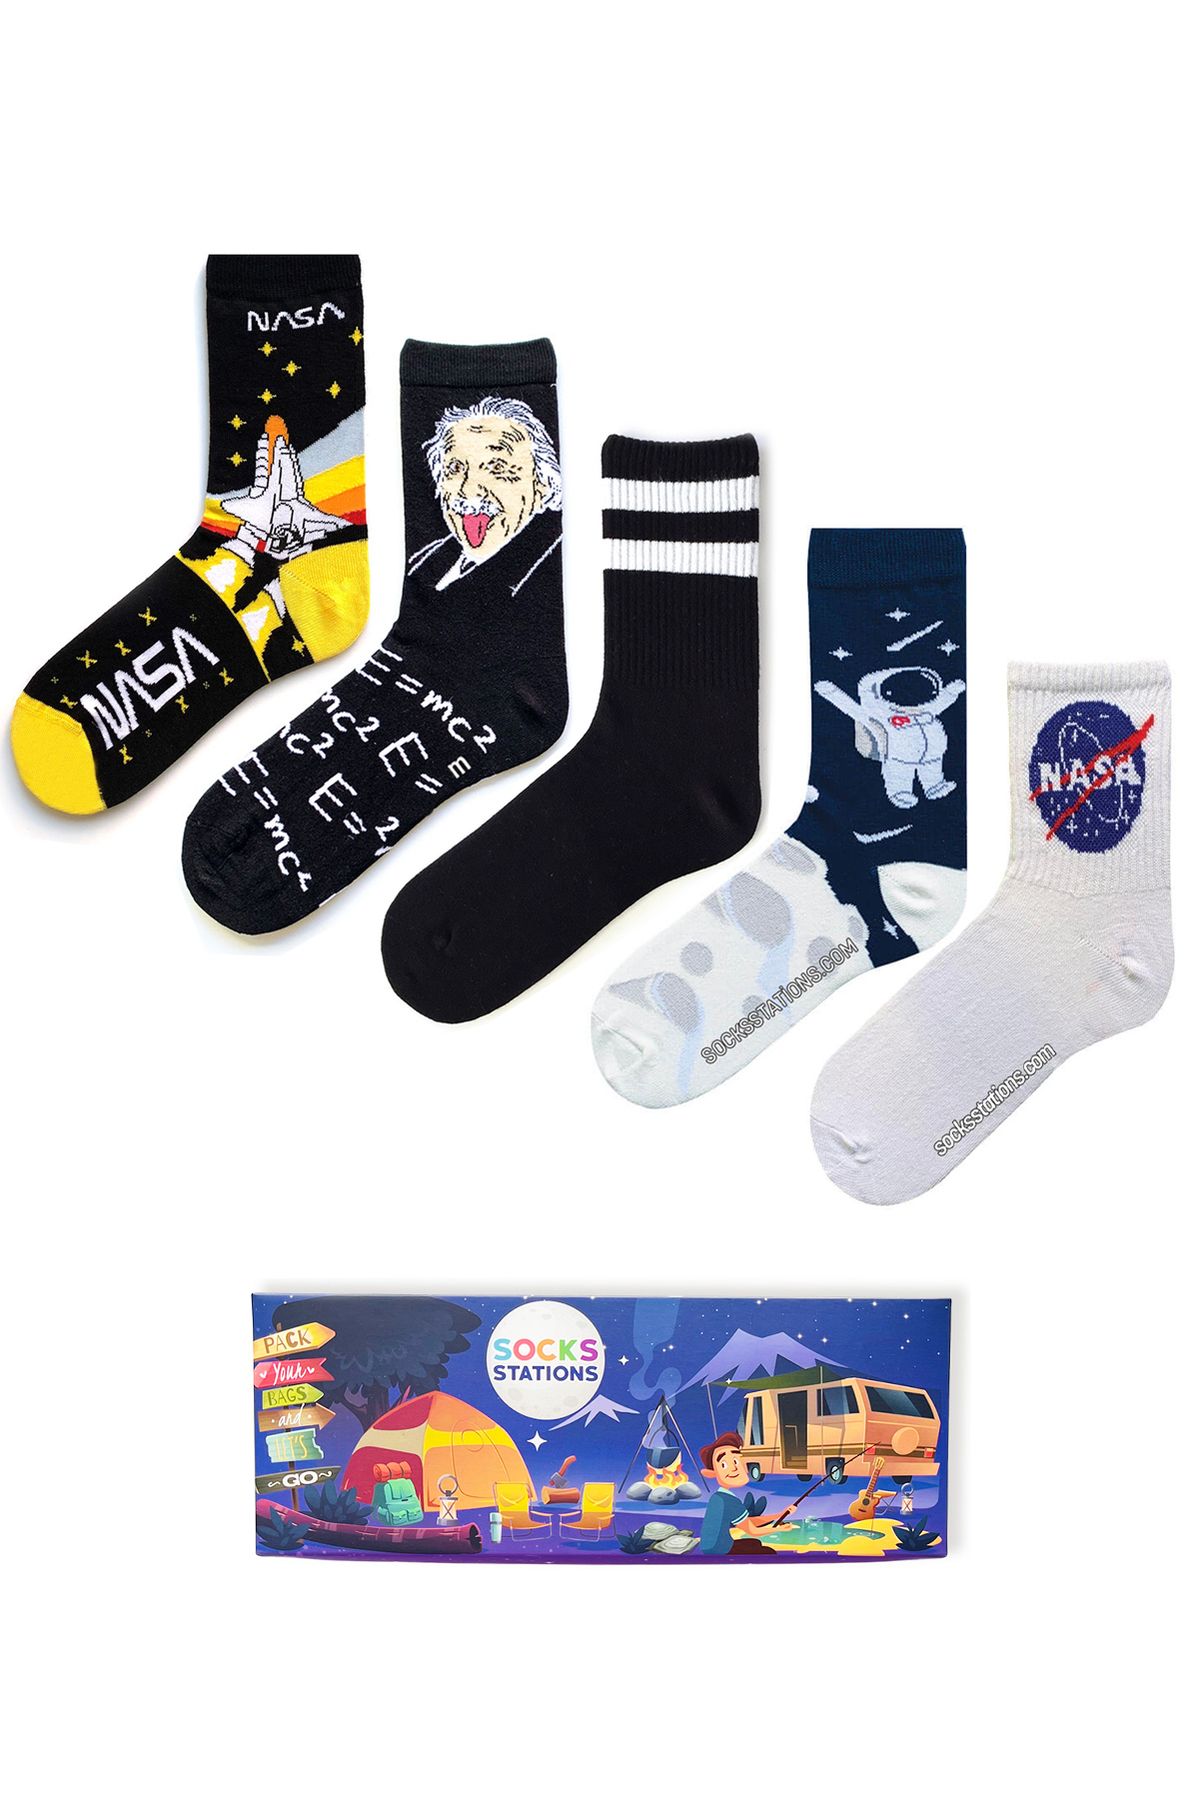 Socks Stations Astronot Ve Uzay Desenli Renkli Çorap Kutusu 5'li